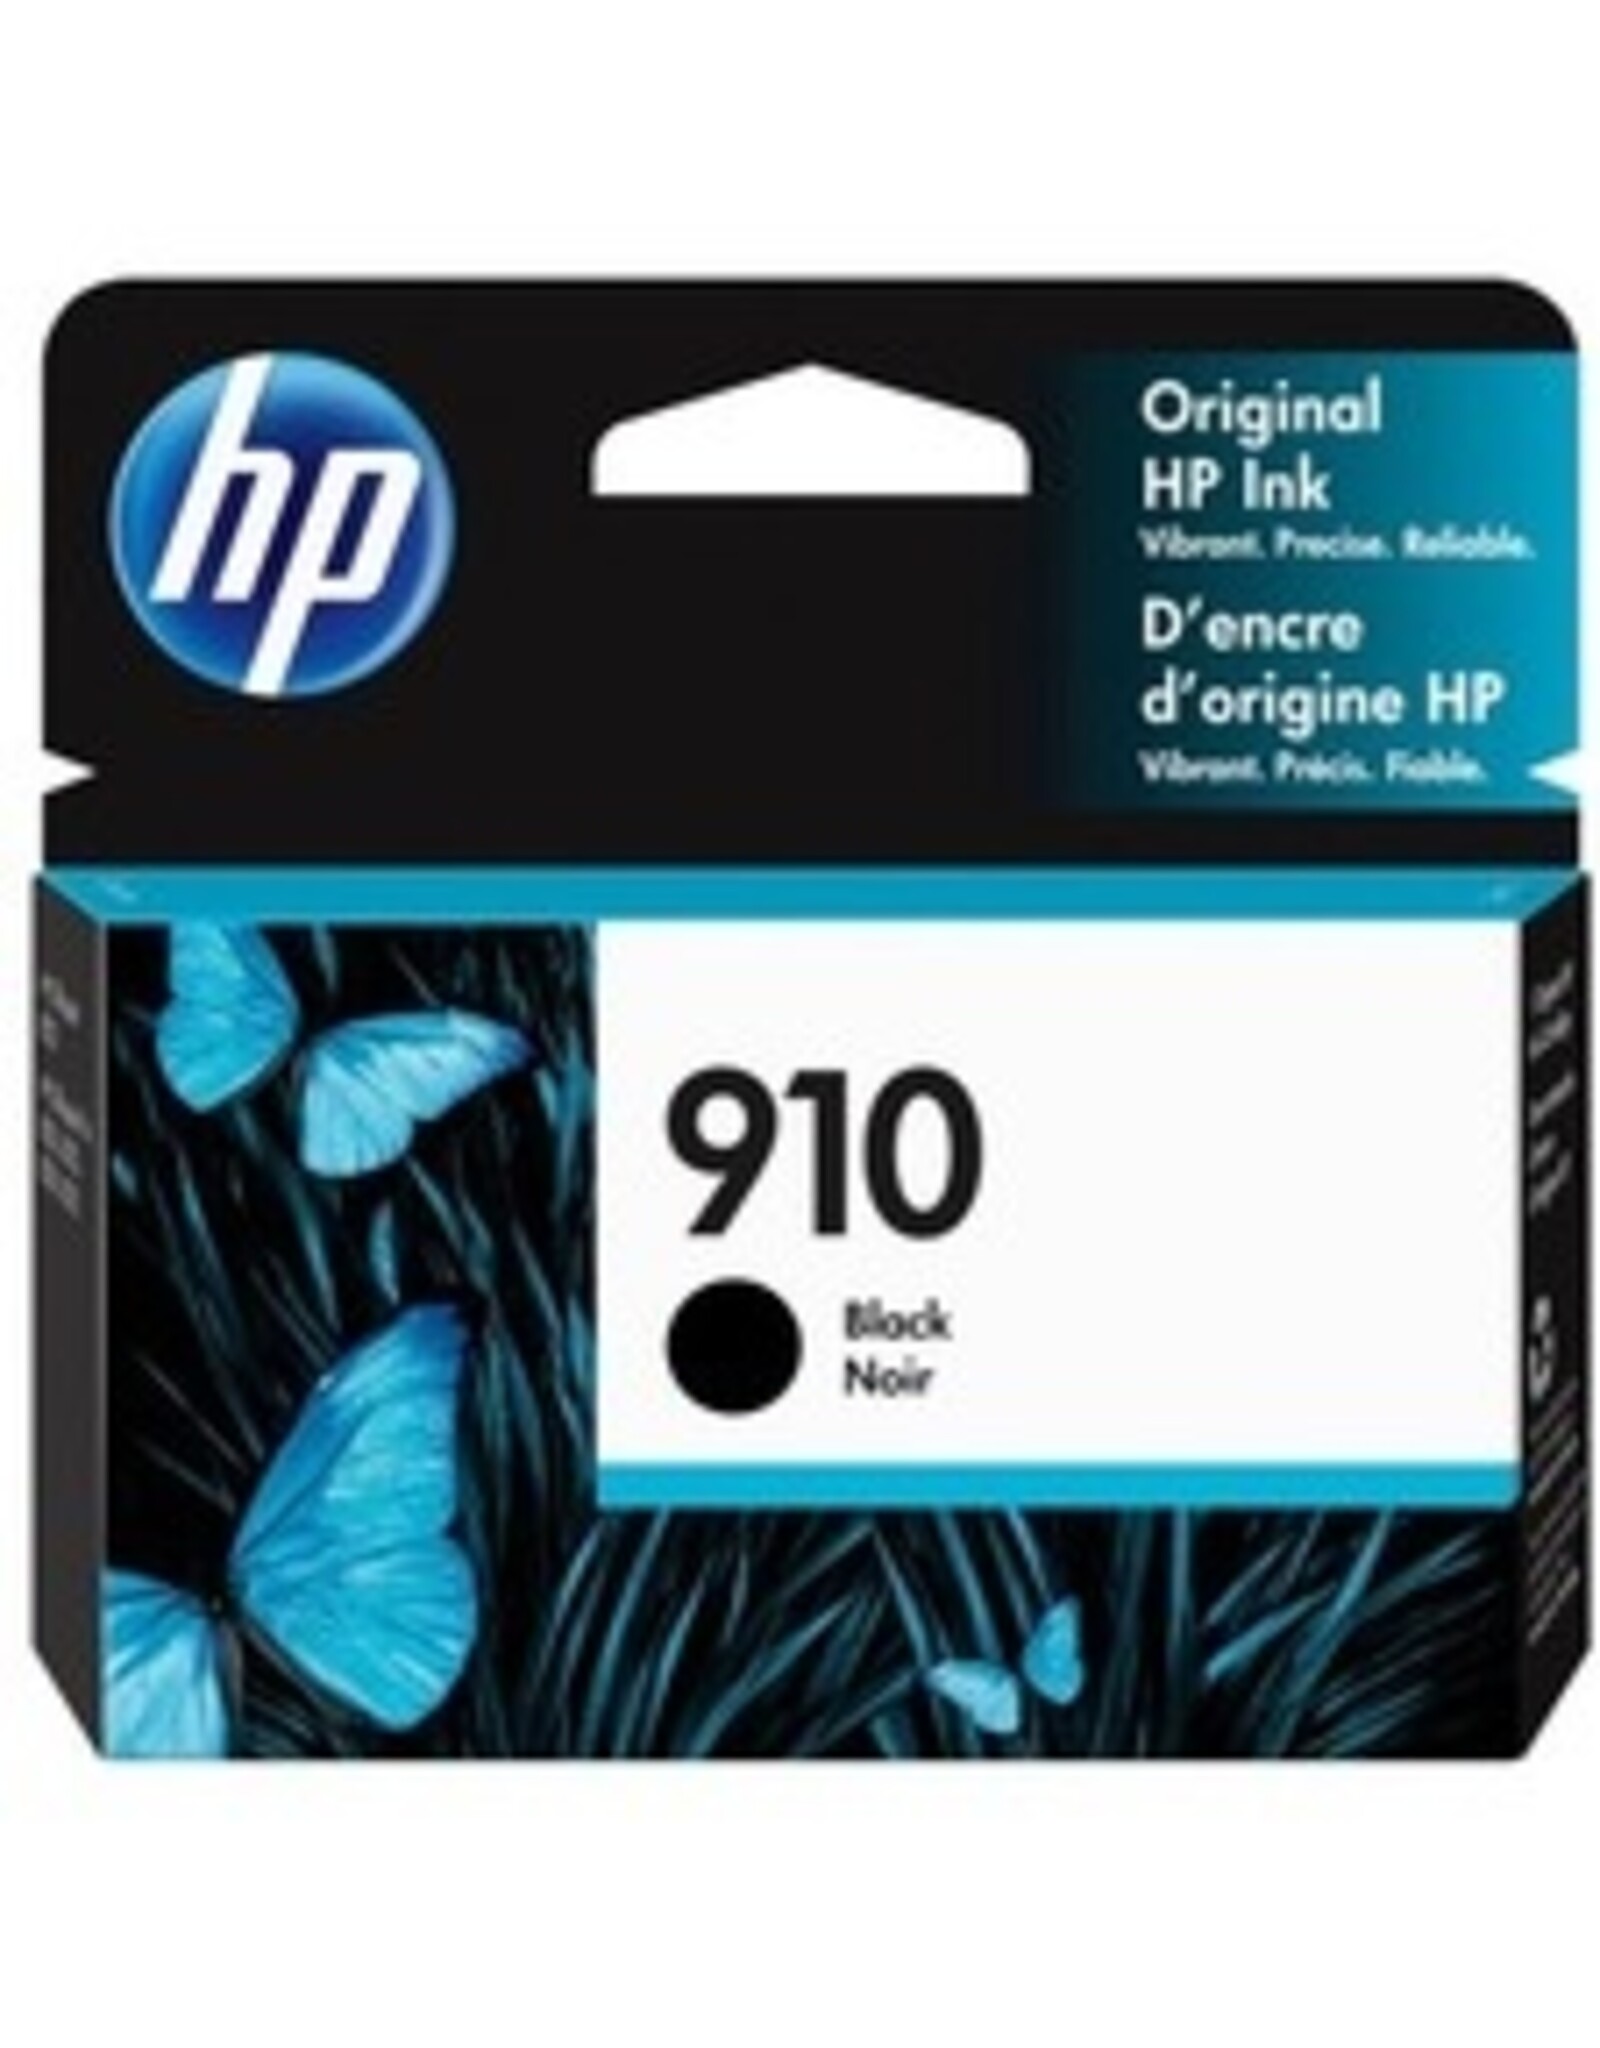 HP HP 910 Original Ink Cartridge - Black